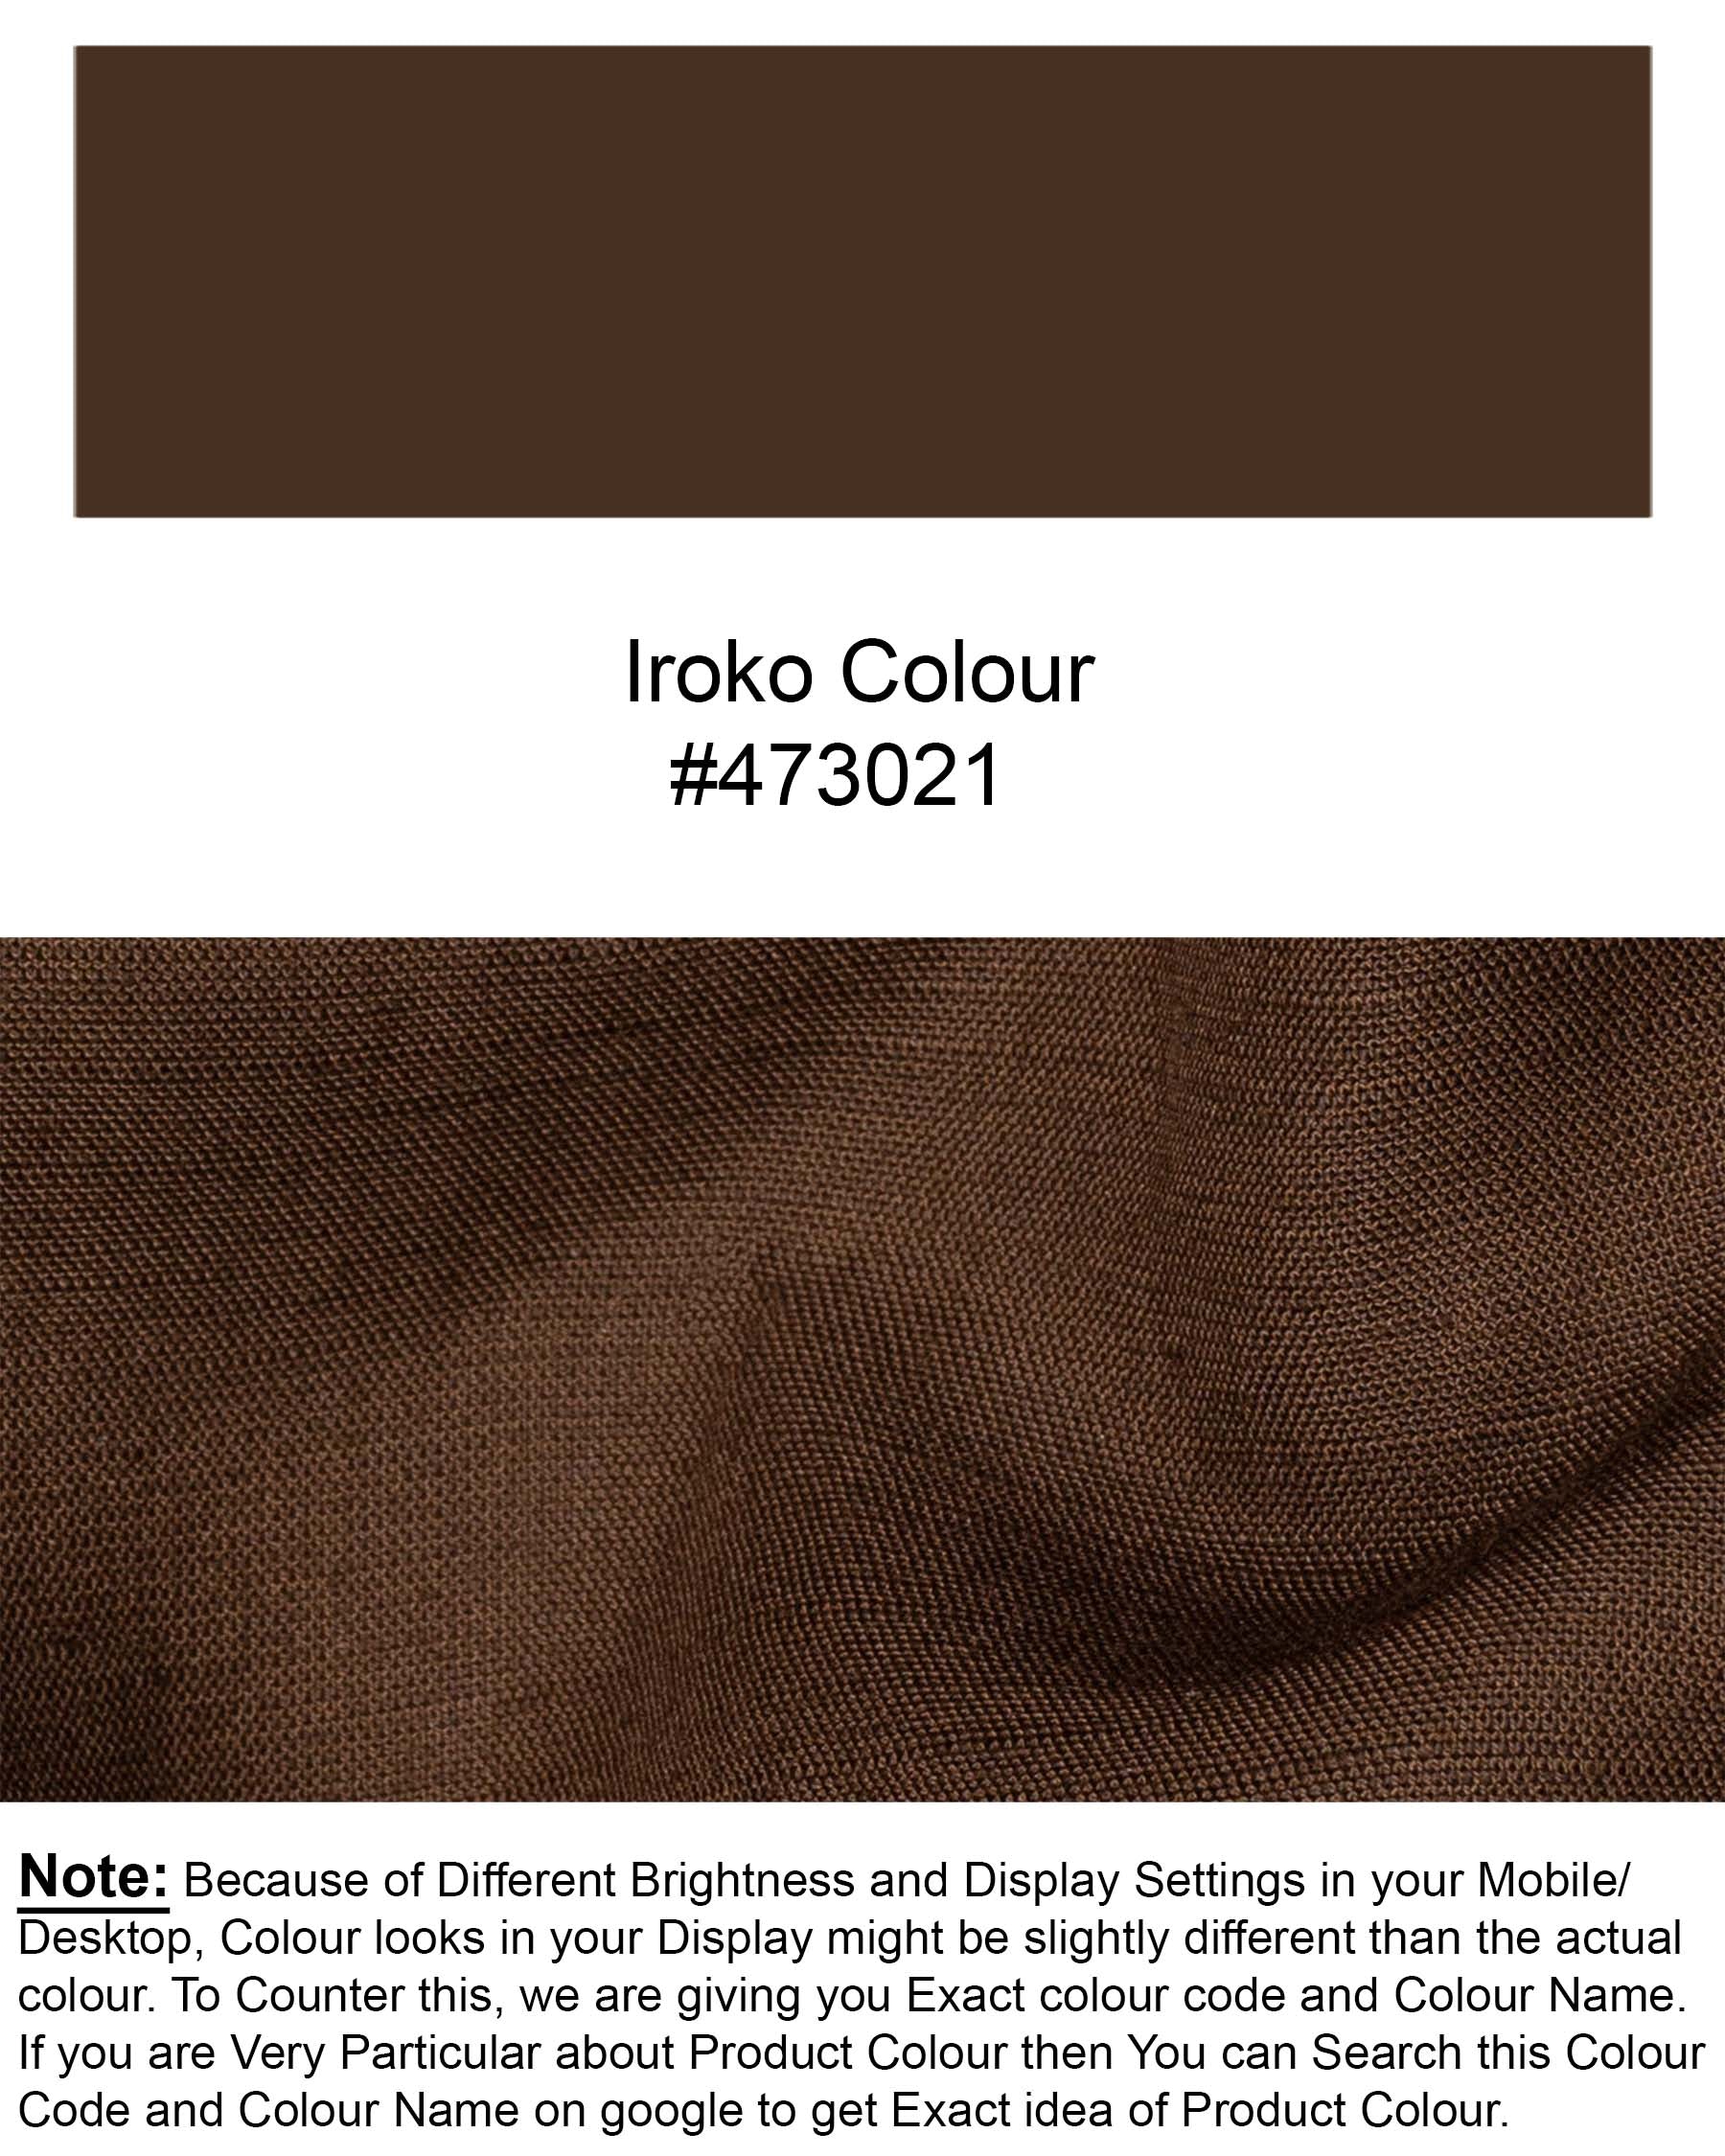 Iroko Brown with White Sleeve Luxurious Linen designer Shirt 6920-P359-38,6920-P359-38,6920-P359-39,6920-P359-39,6920-P359-40,6920-P359-40,6920-P359-42,6920-P359-42,6920-P359-44,6920-P359-44,6920-P359-46,6920-P359-46,6920-P359-48,6920-P359-48,6920-P359-50,6920-P359-50,6920-P359-52,6920-P359-52